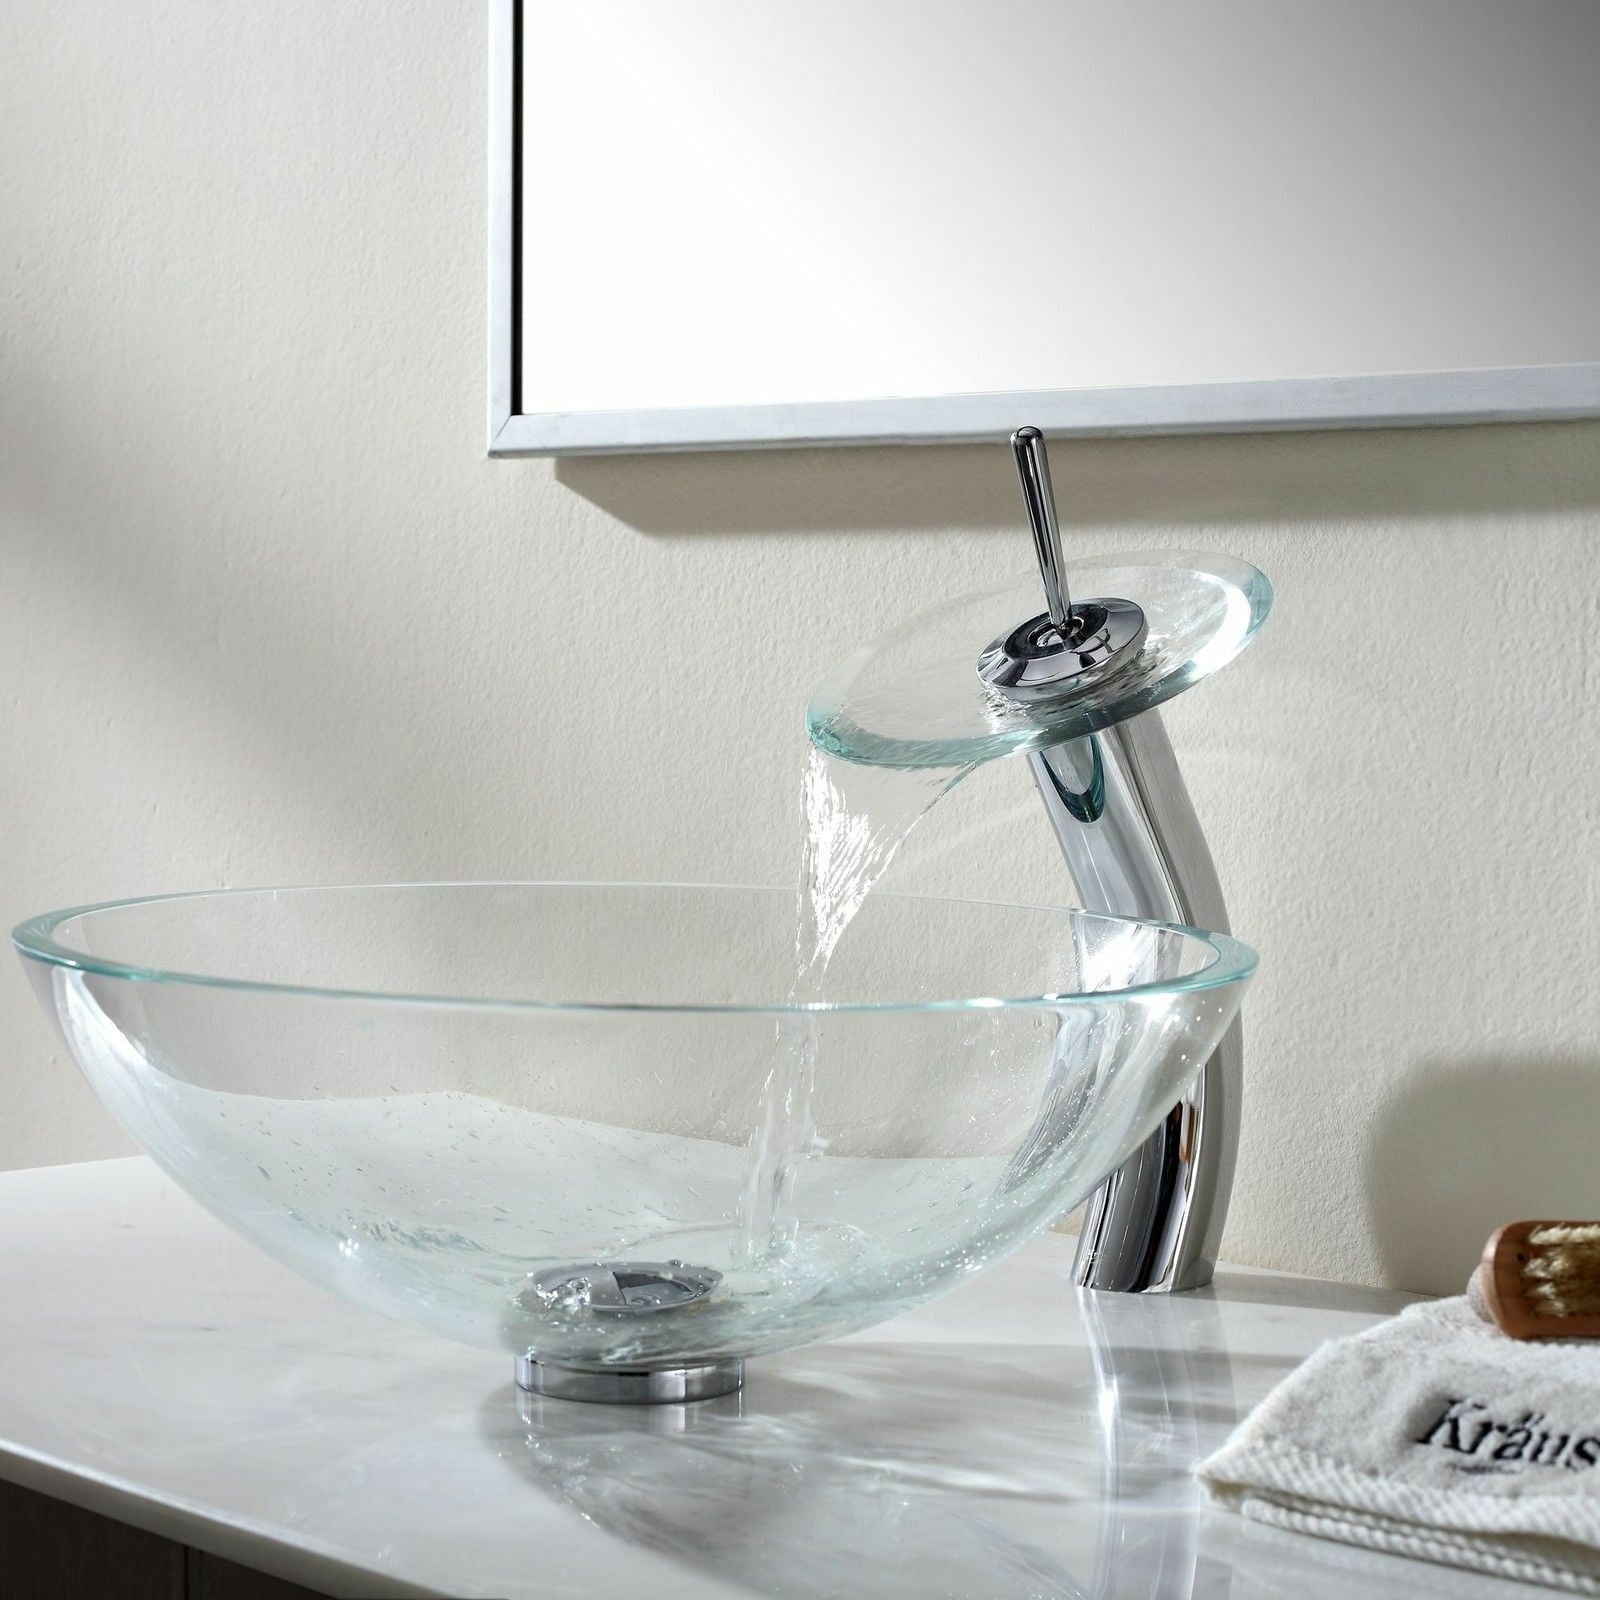 Bathroom Vessel Sink Tempered Glass Bowl Basin Faucet Pop-up Drain Bowl Combo US 